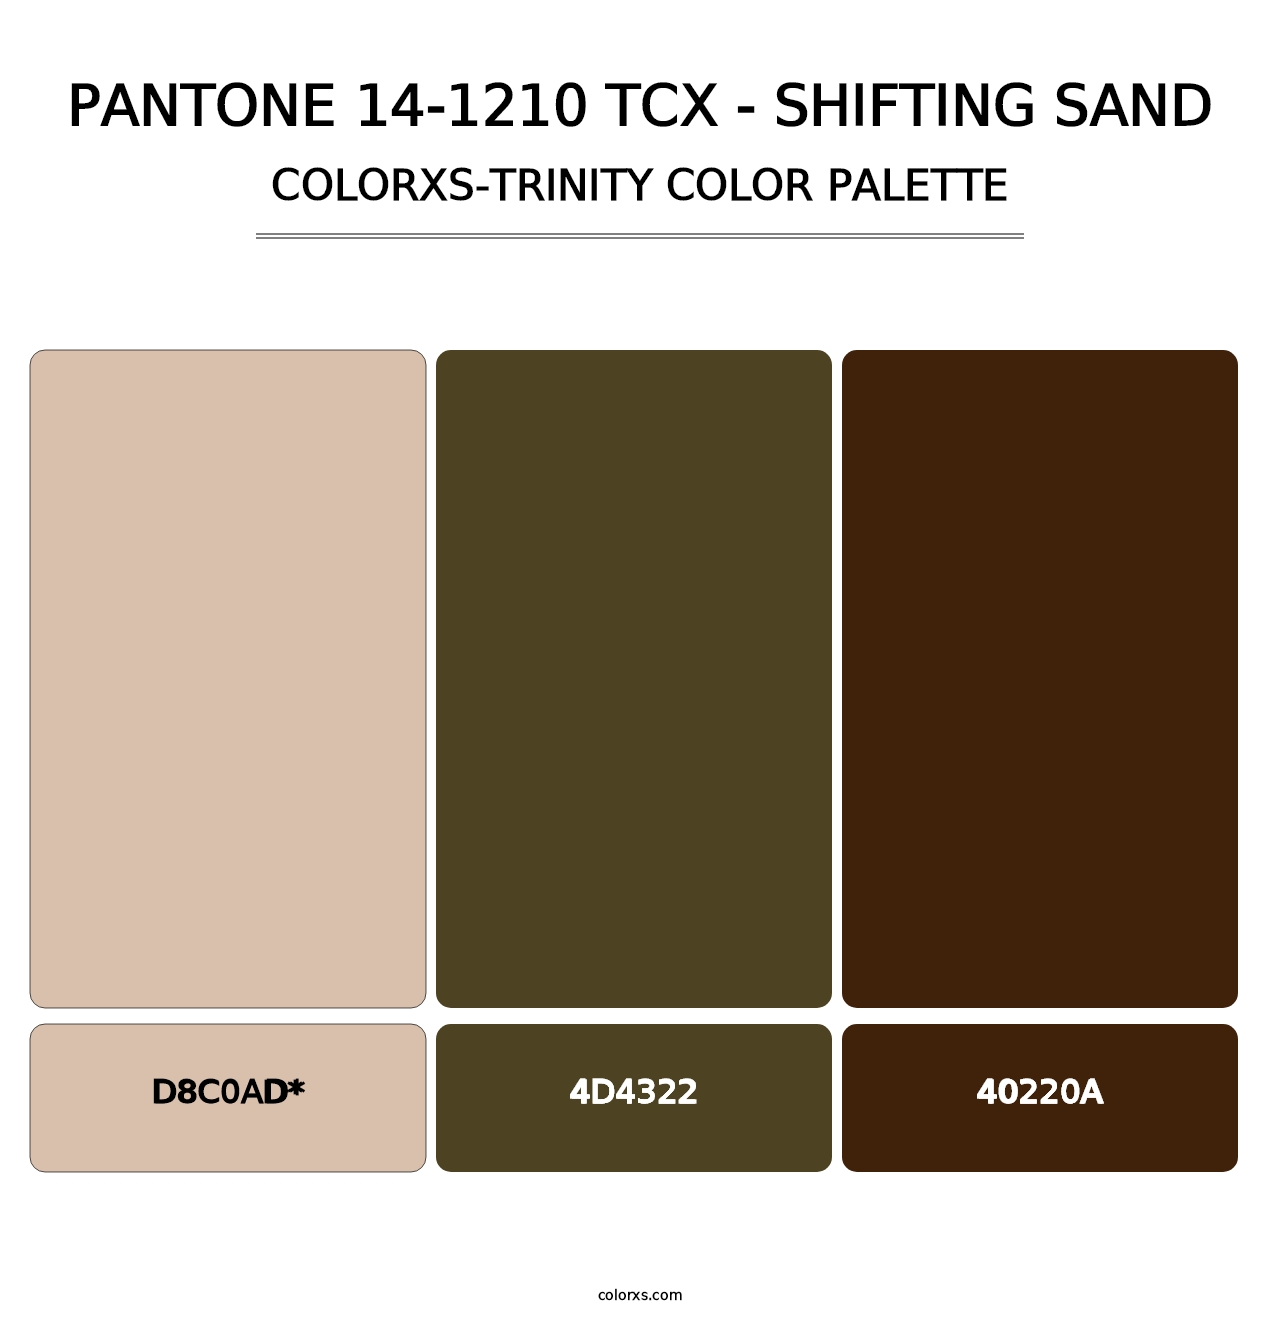 PANTONE 14-1210 TCX - Shifting Sand - Colorxs Trinity Palette